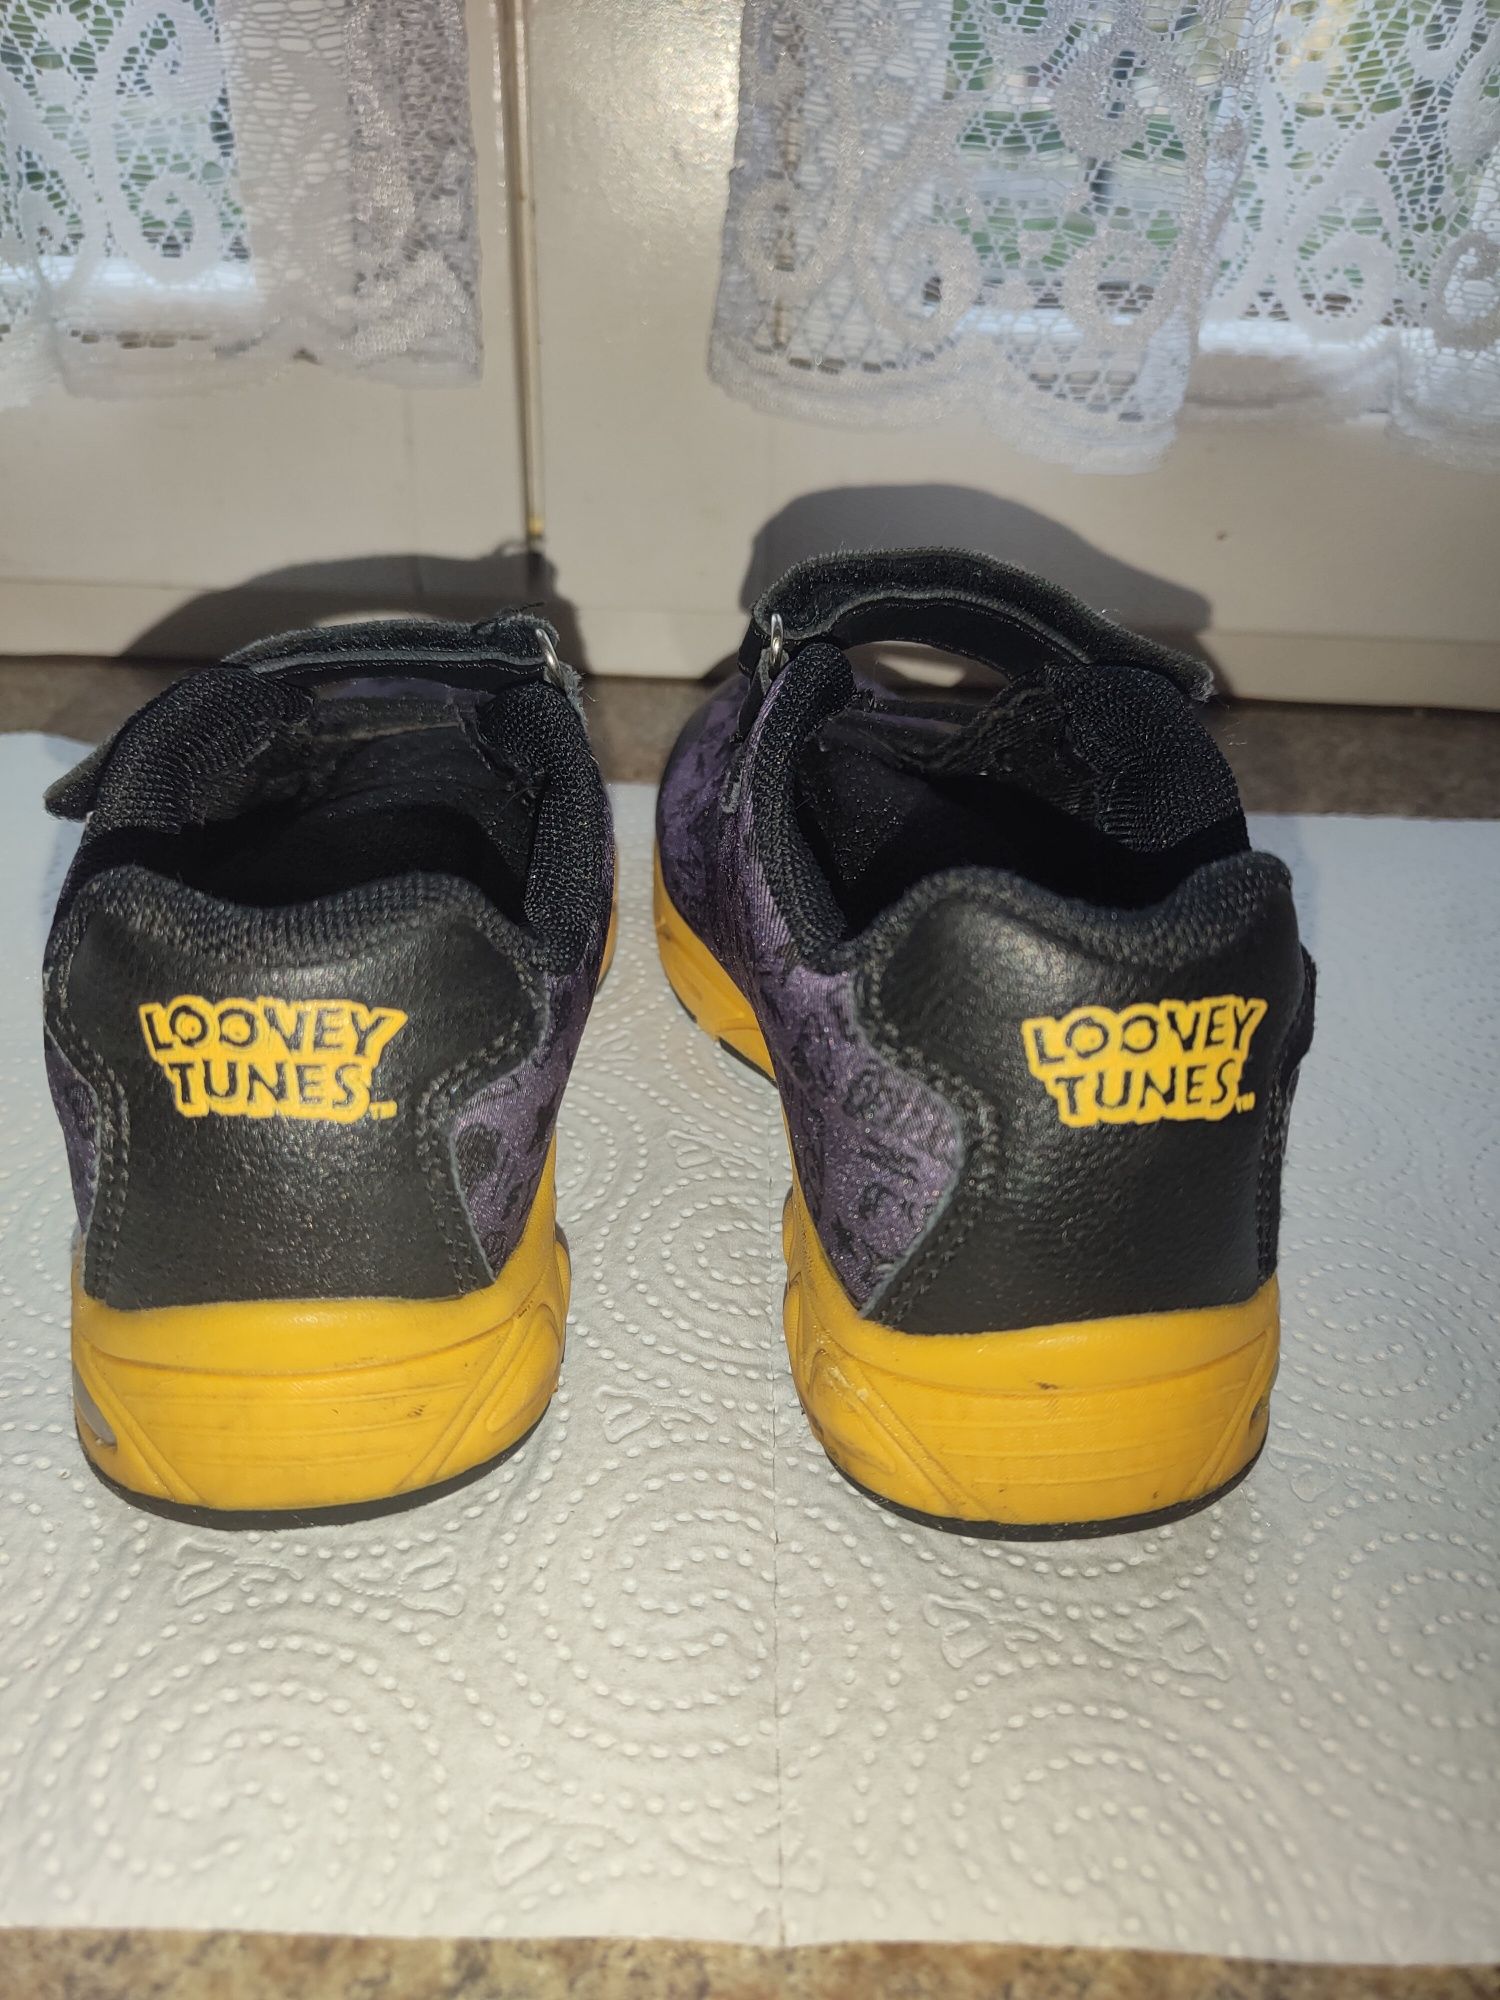 Buty chłopięce typu adidas nr.31 Looney Tunes